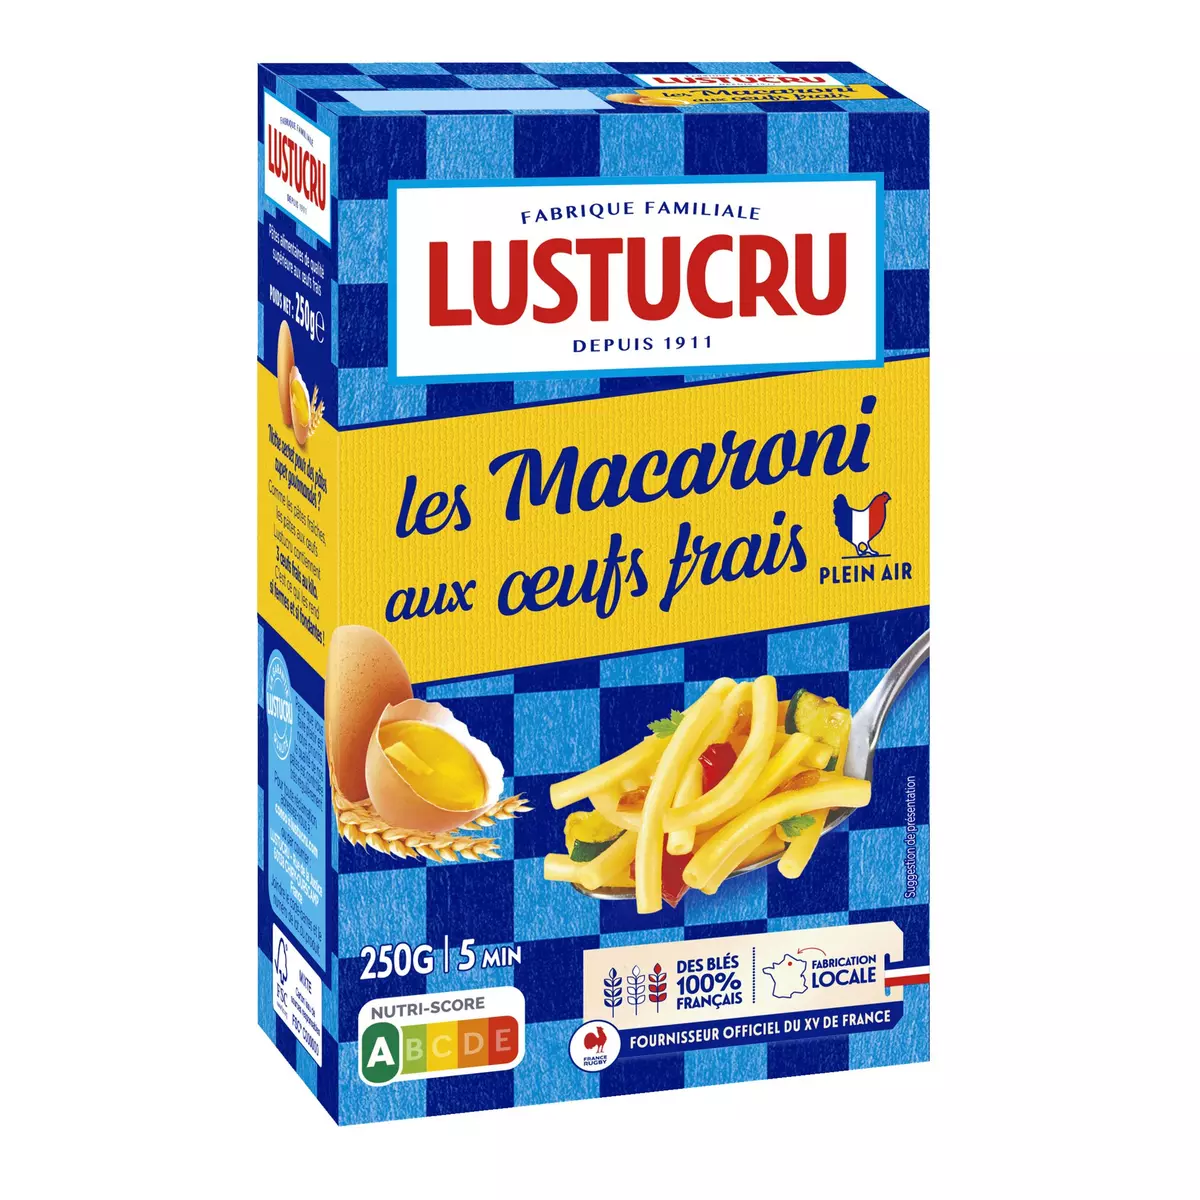 LUSTUCRU Macaroni aux œufs frais 250g